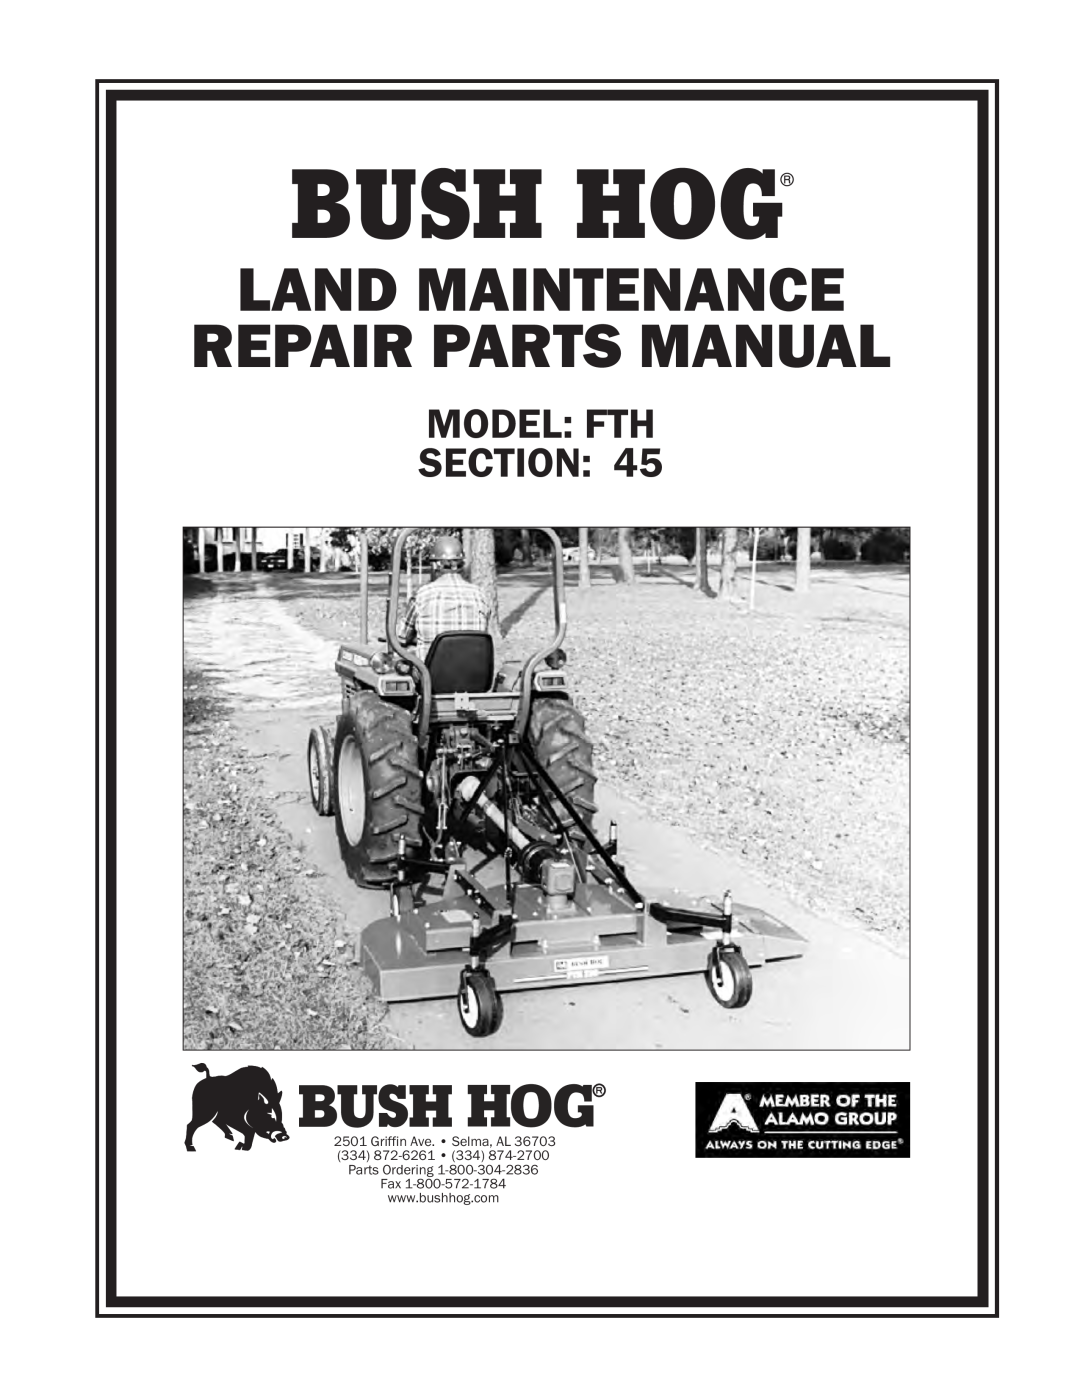 Bush Hog FTH 480 manual Bush Hog, Repair Parts Manual, Land Maintenance, Section, Model Fth, 334 872-6261 334 